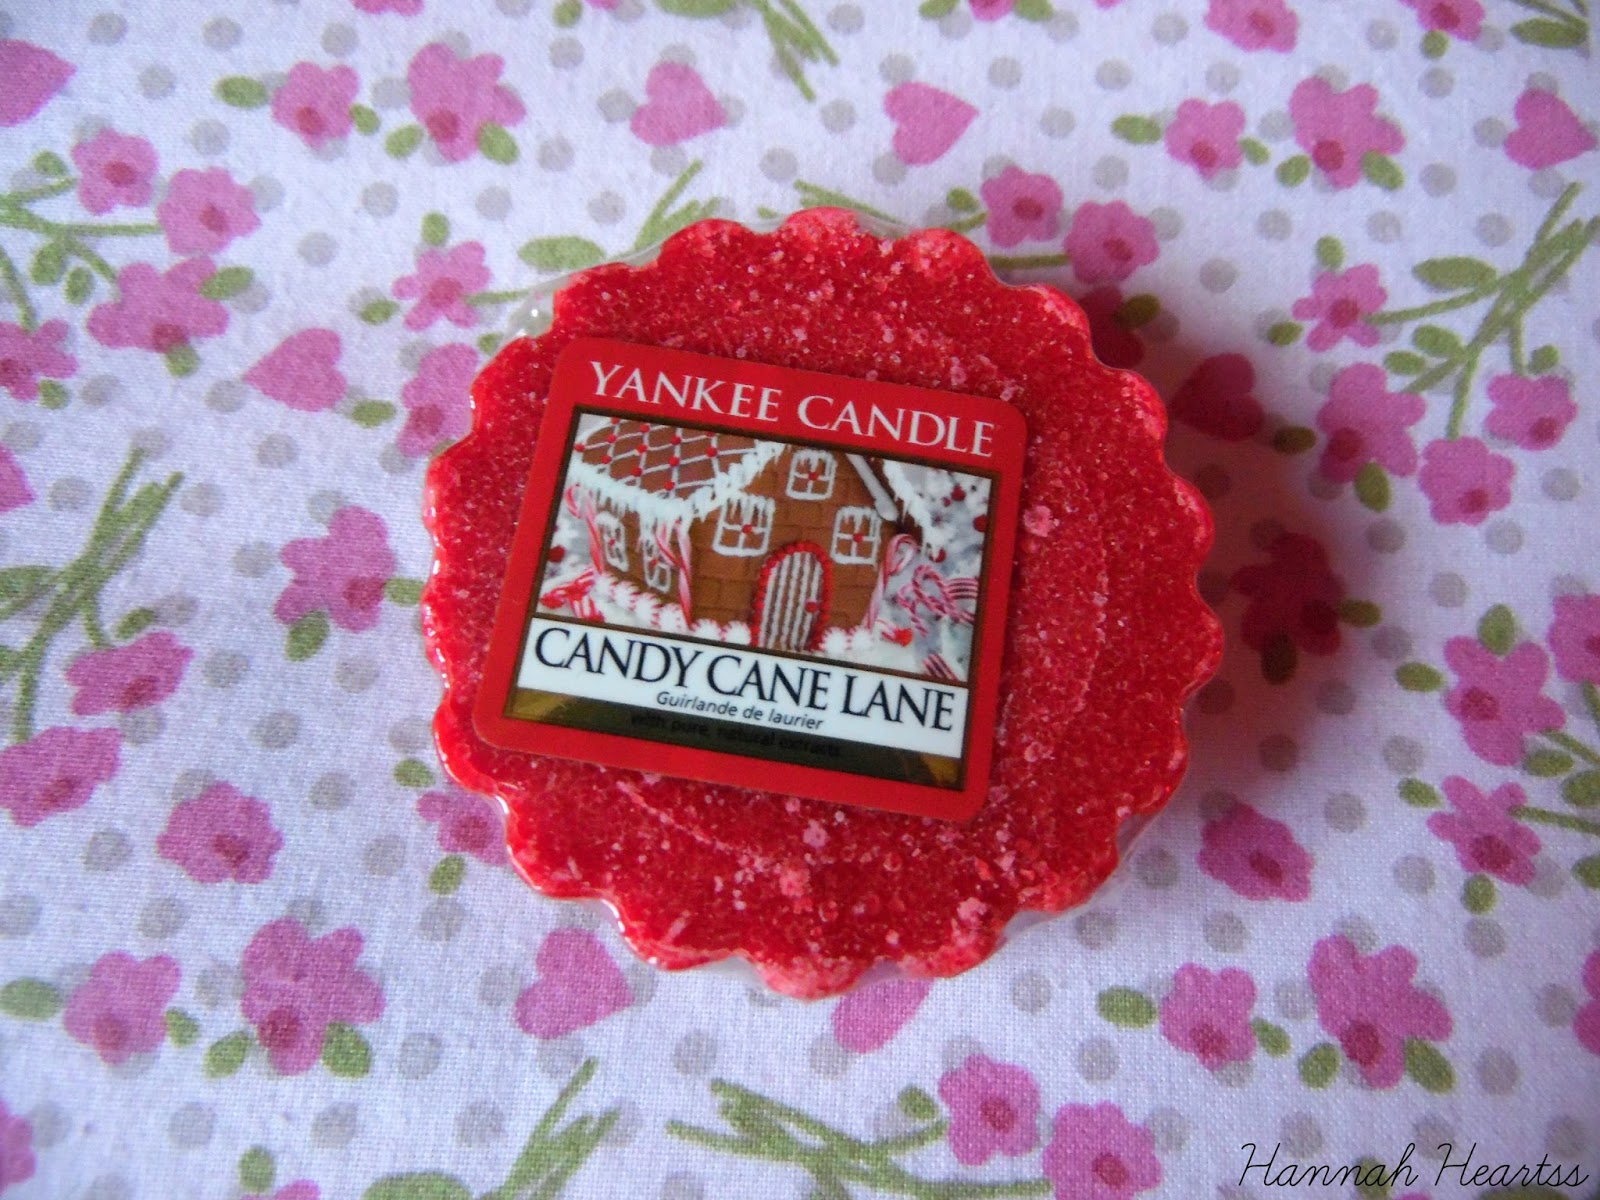 Yankee Candle Candy Cane Lane